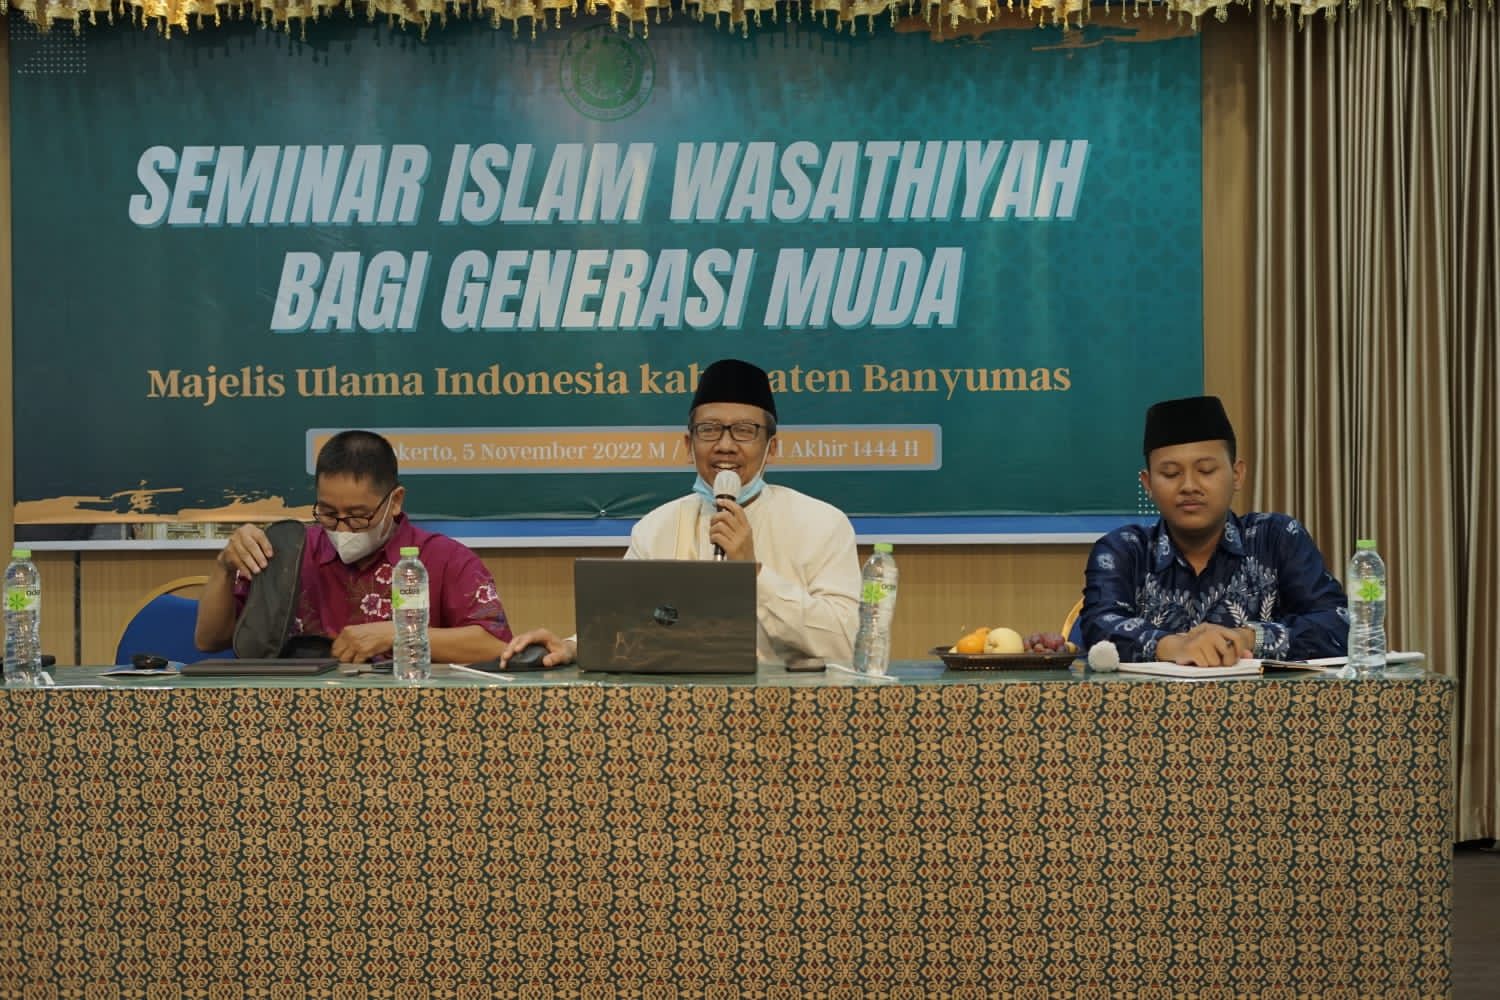 MUI Banyumas Gelar Seminar Islam Wasathiyah Bagi Generasi Muda